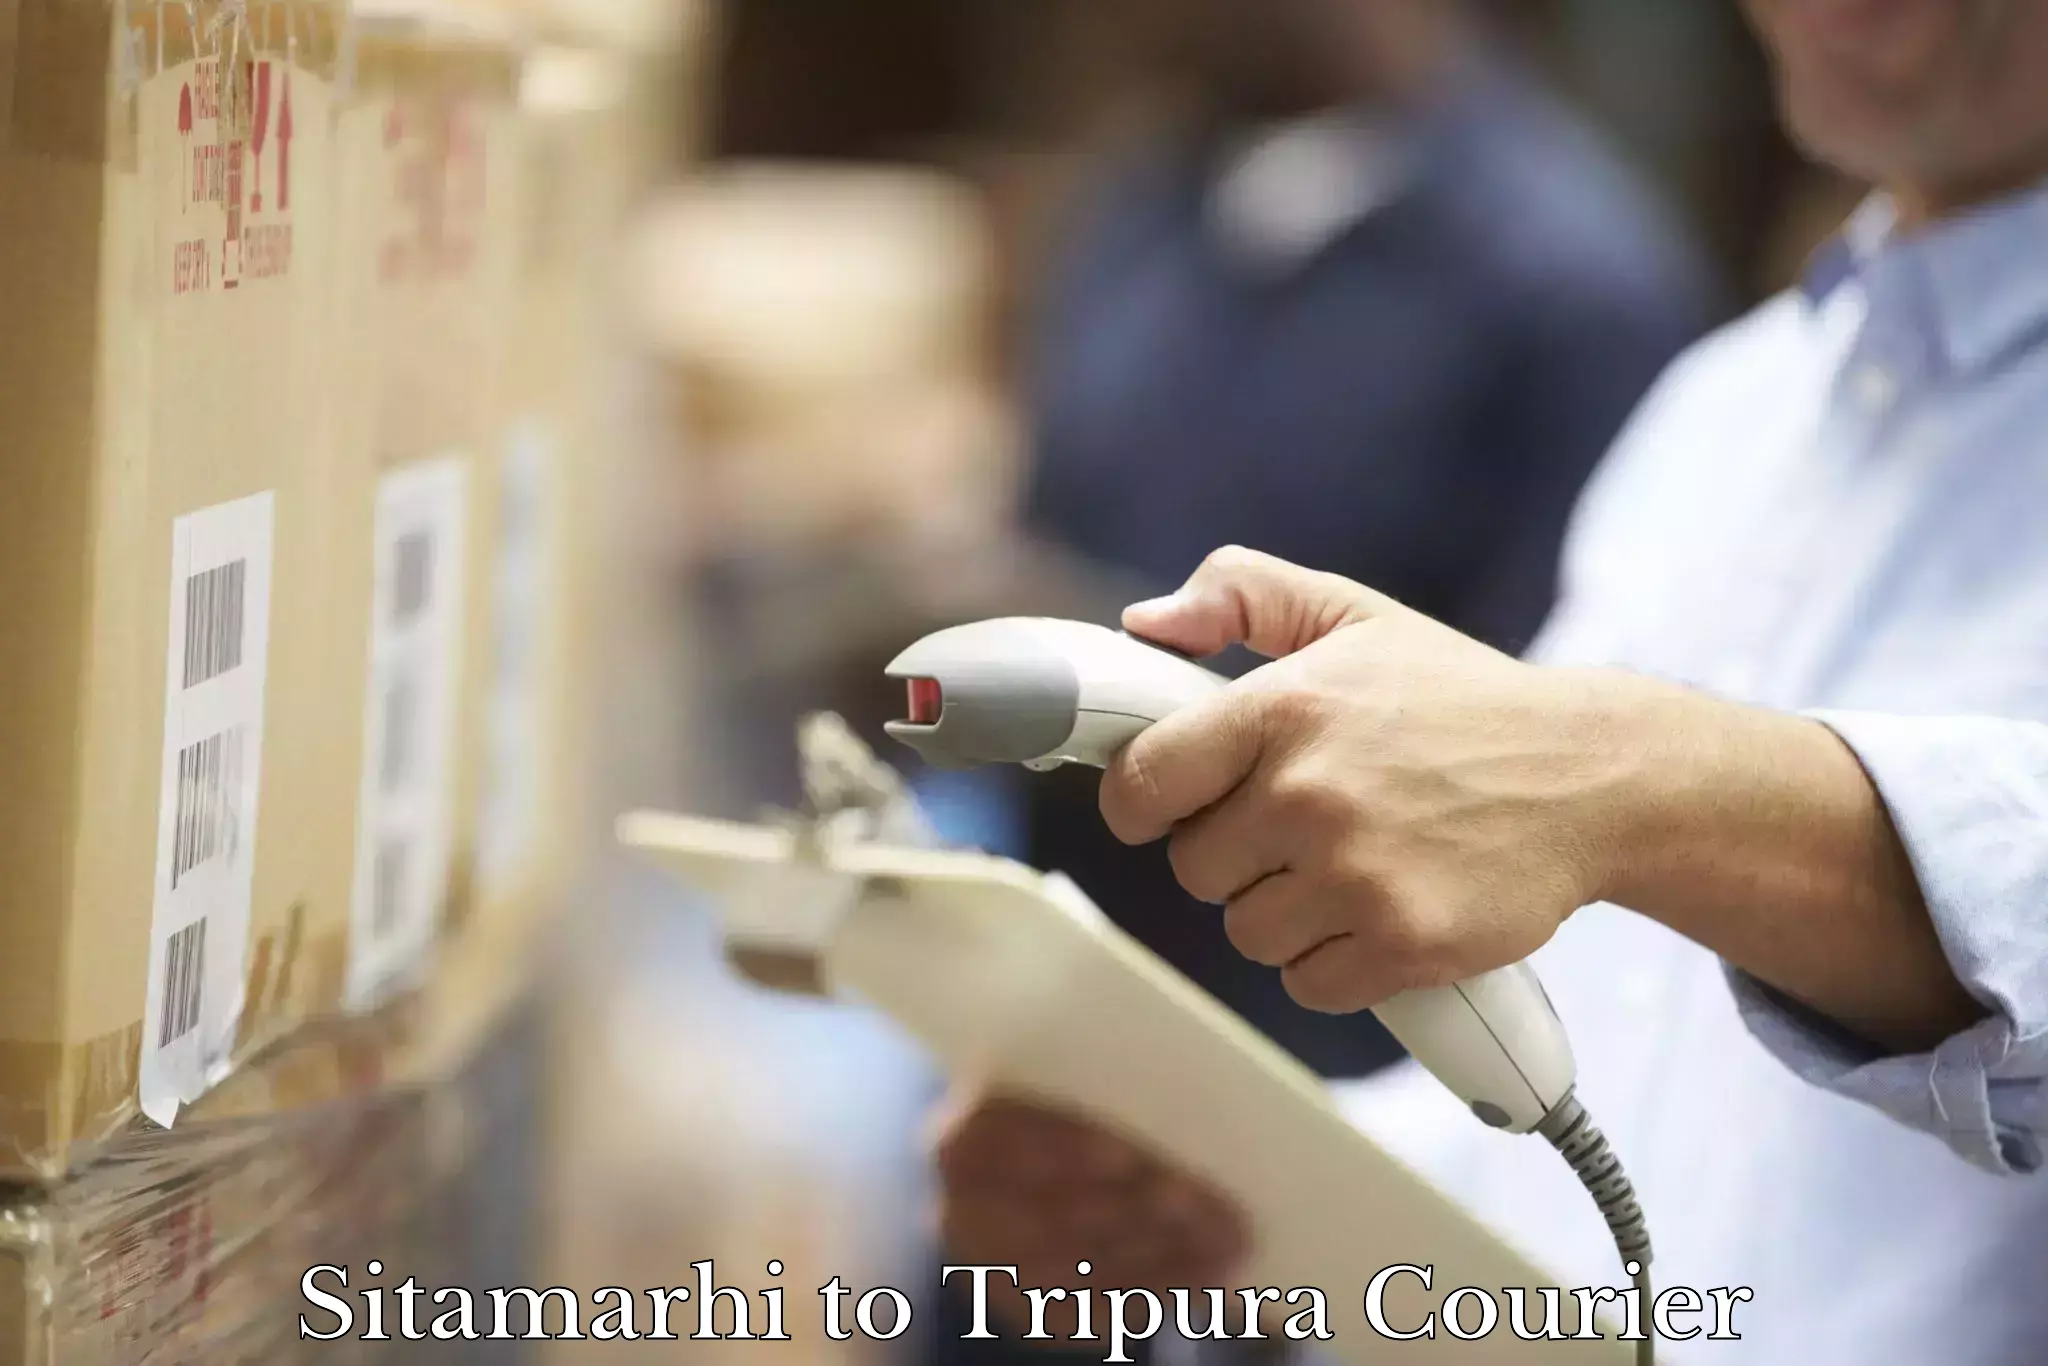 Efficient order fulfillment Sitamarhi to Udaipur Tripura